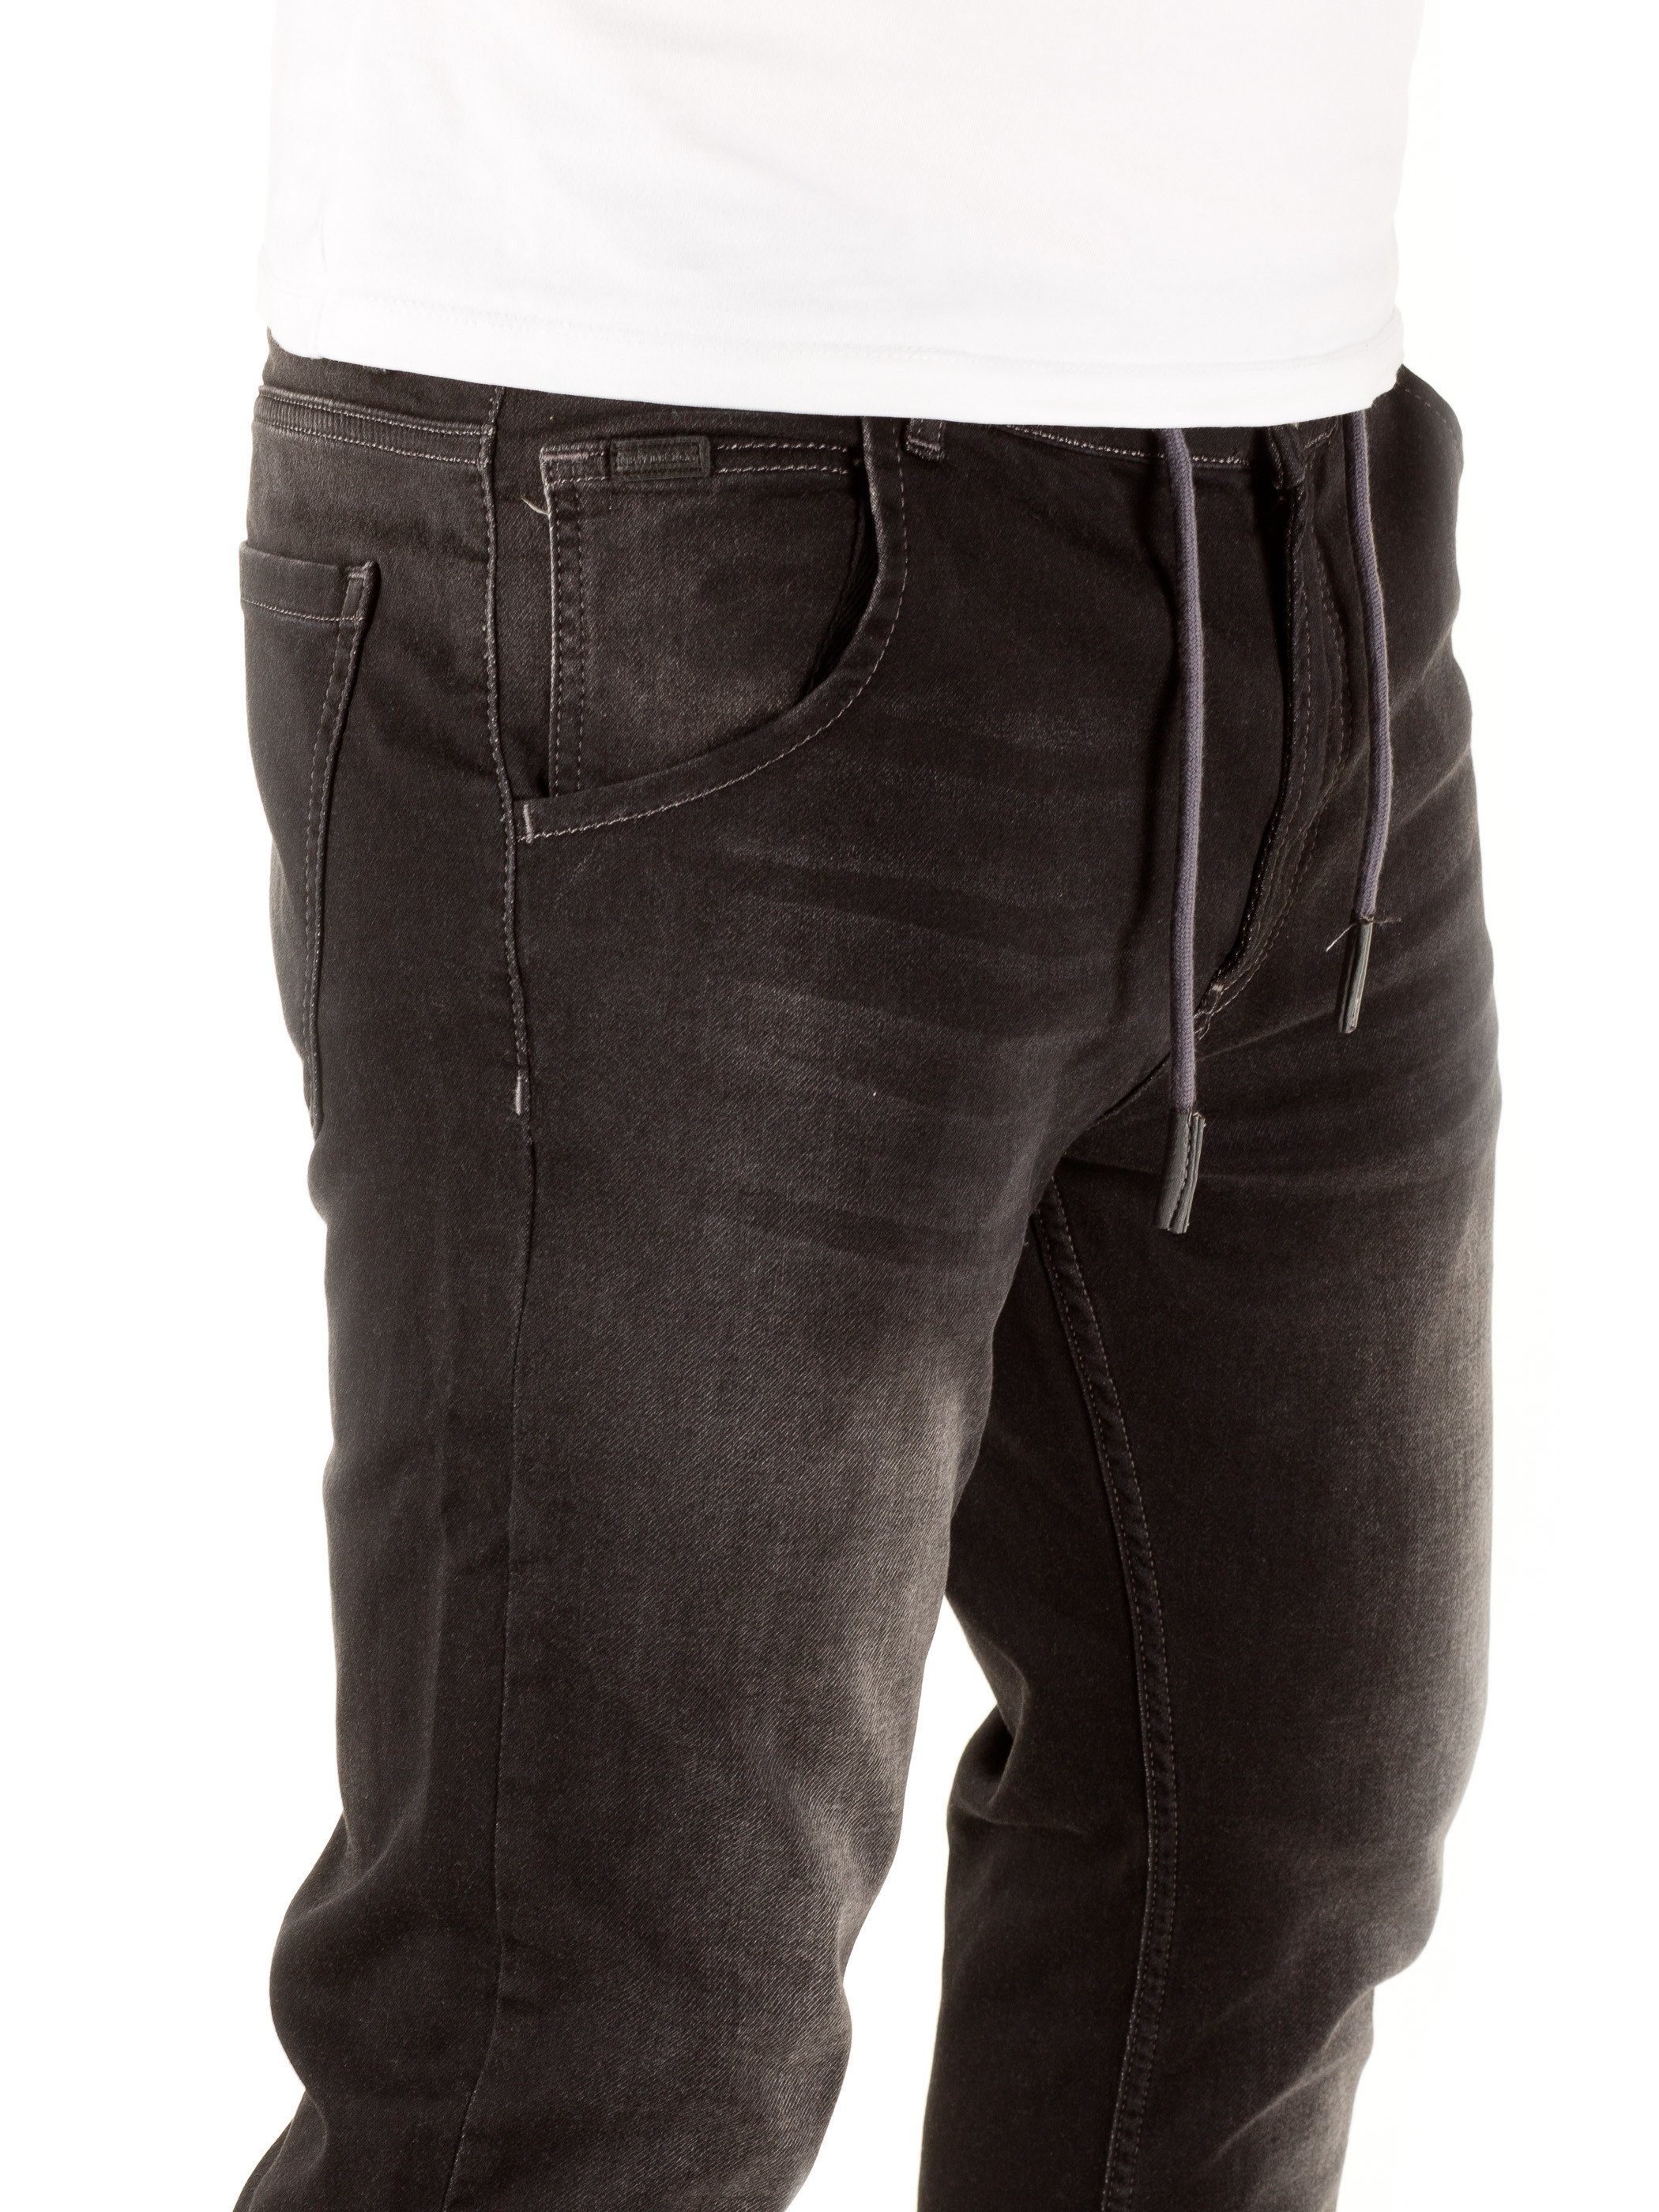 Hose black Stretch 4205) Jogging Jeans-Look Herren Jeans Jogginghose Denim in Sweathosen Joshua in Schwarz Slim-fit-Jeans WOTEGA (phantom